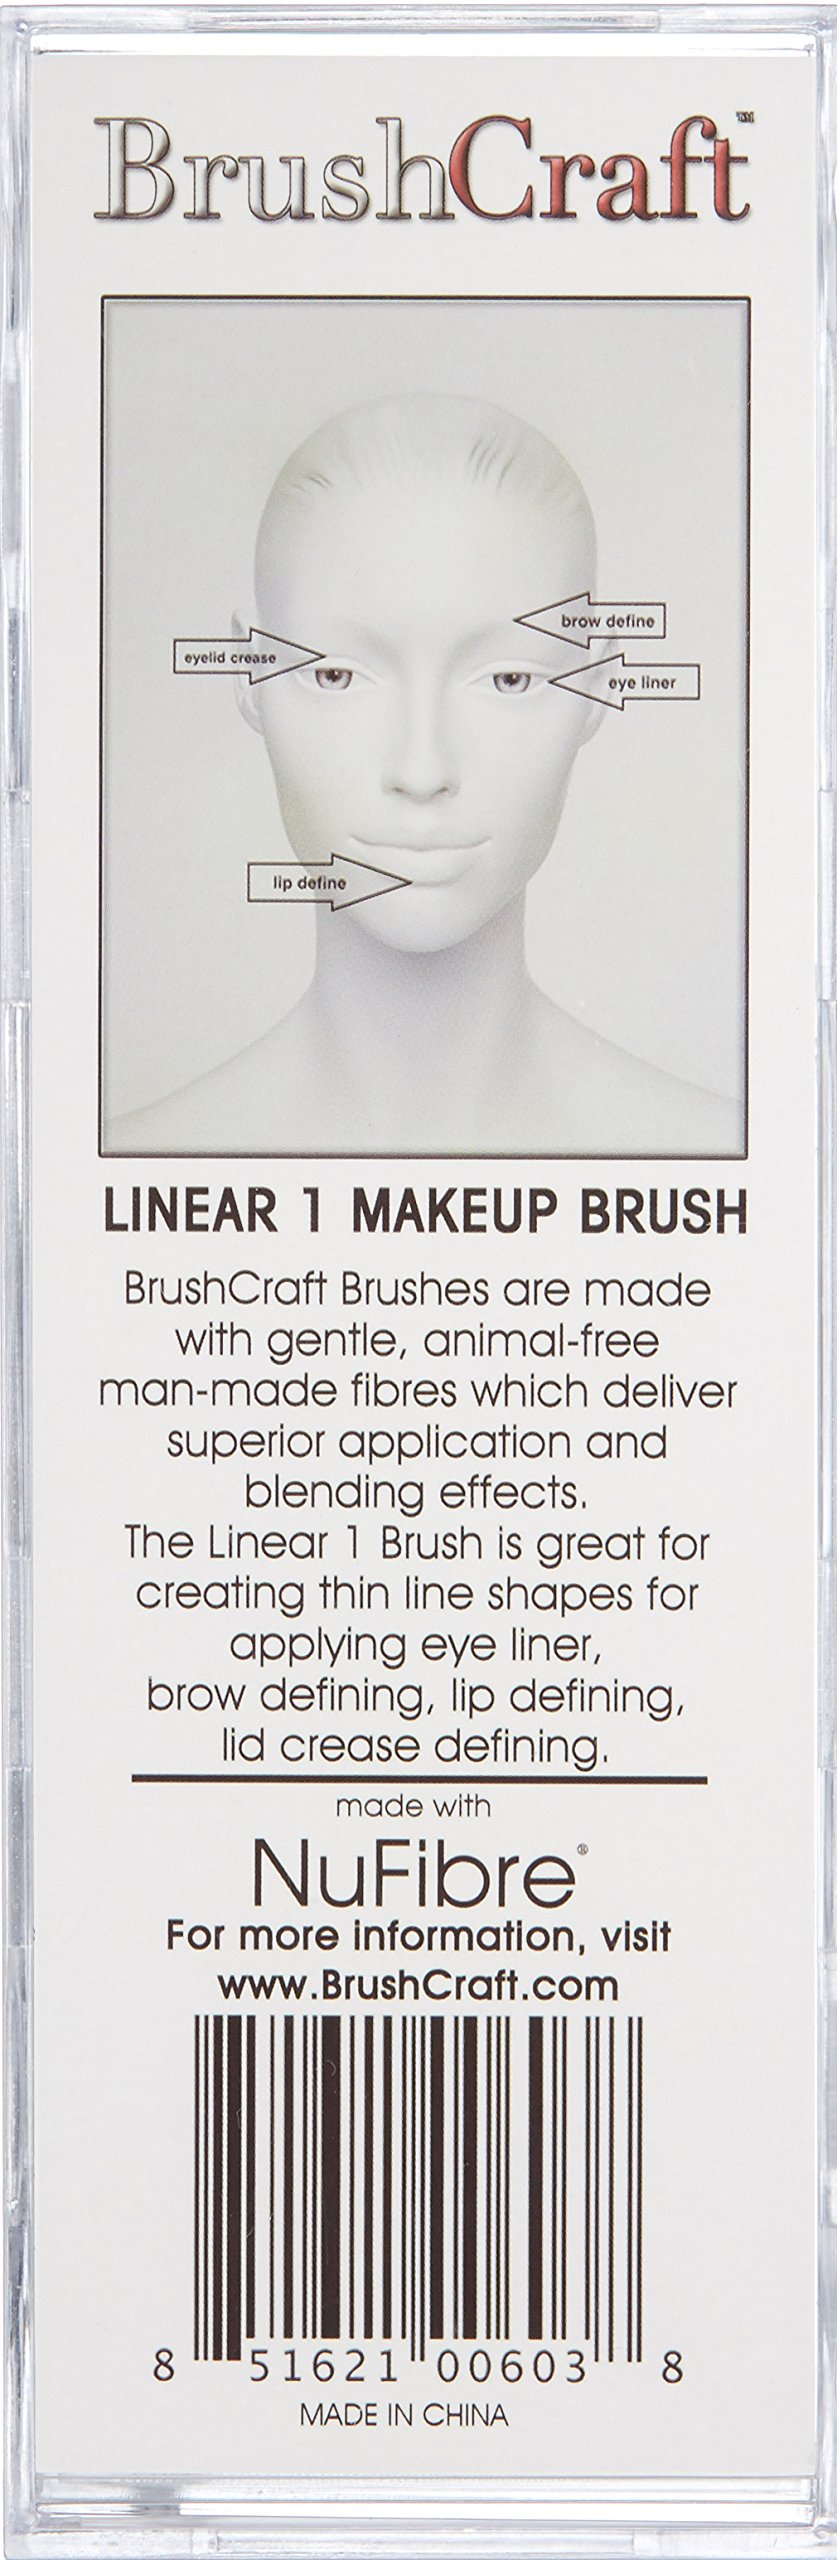 BrushCraft Linear 1